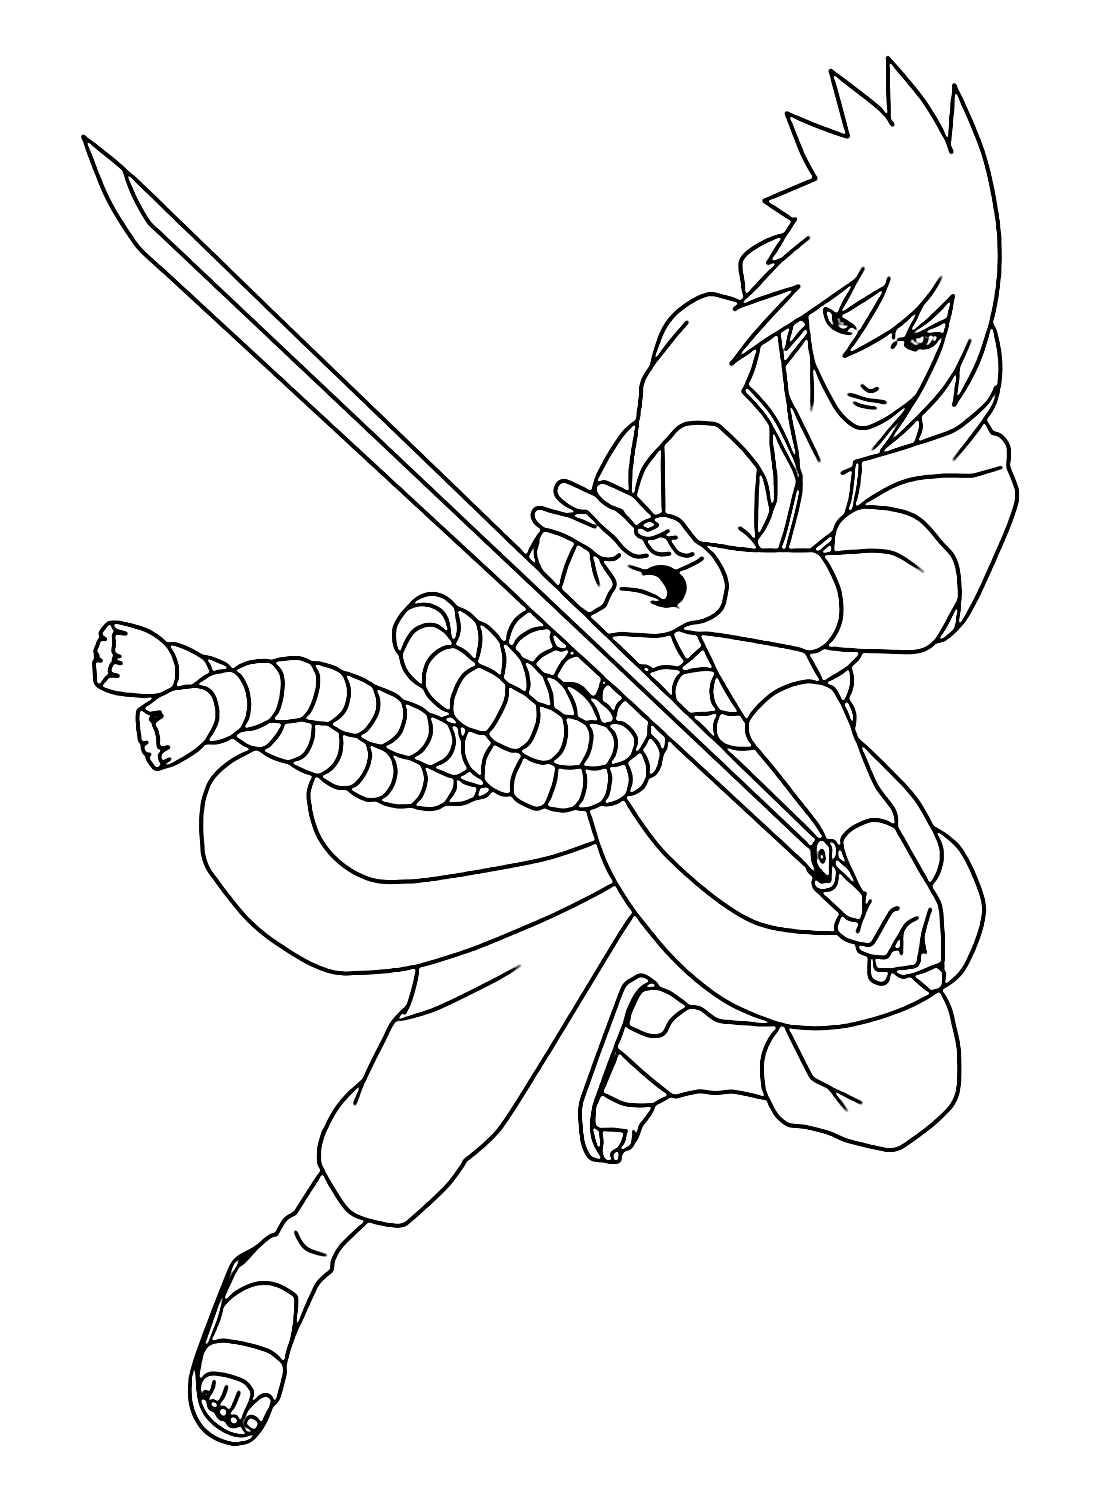 Desenhos para colorir de Sasuke Uchiha - Desenhos para colorir gratuitos  para impressão